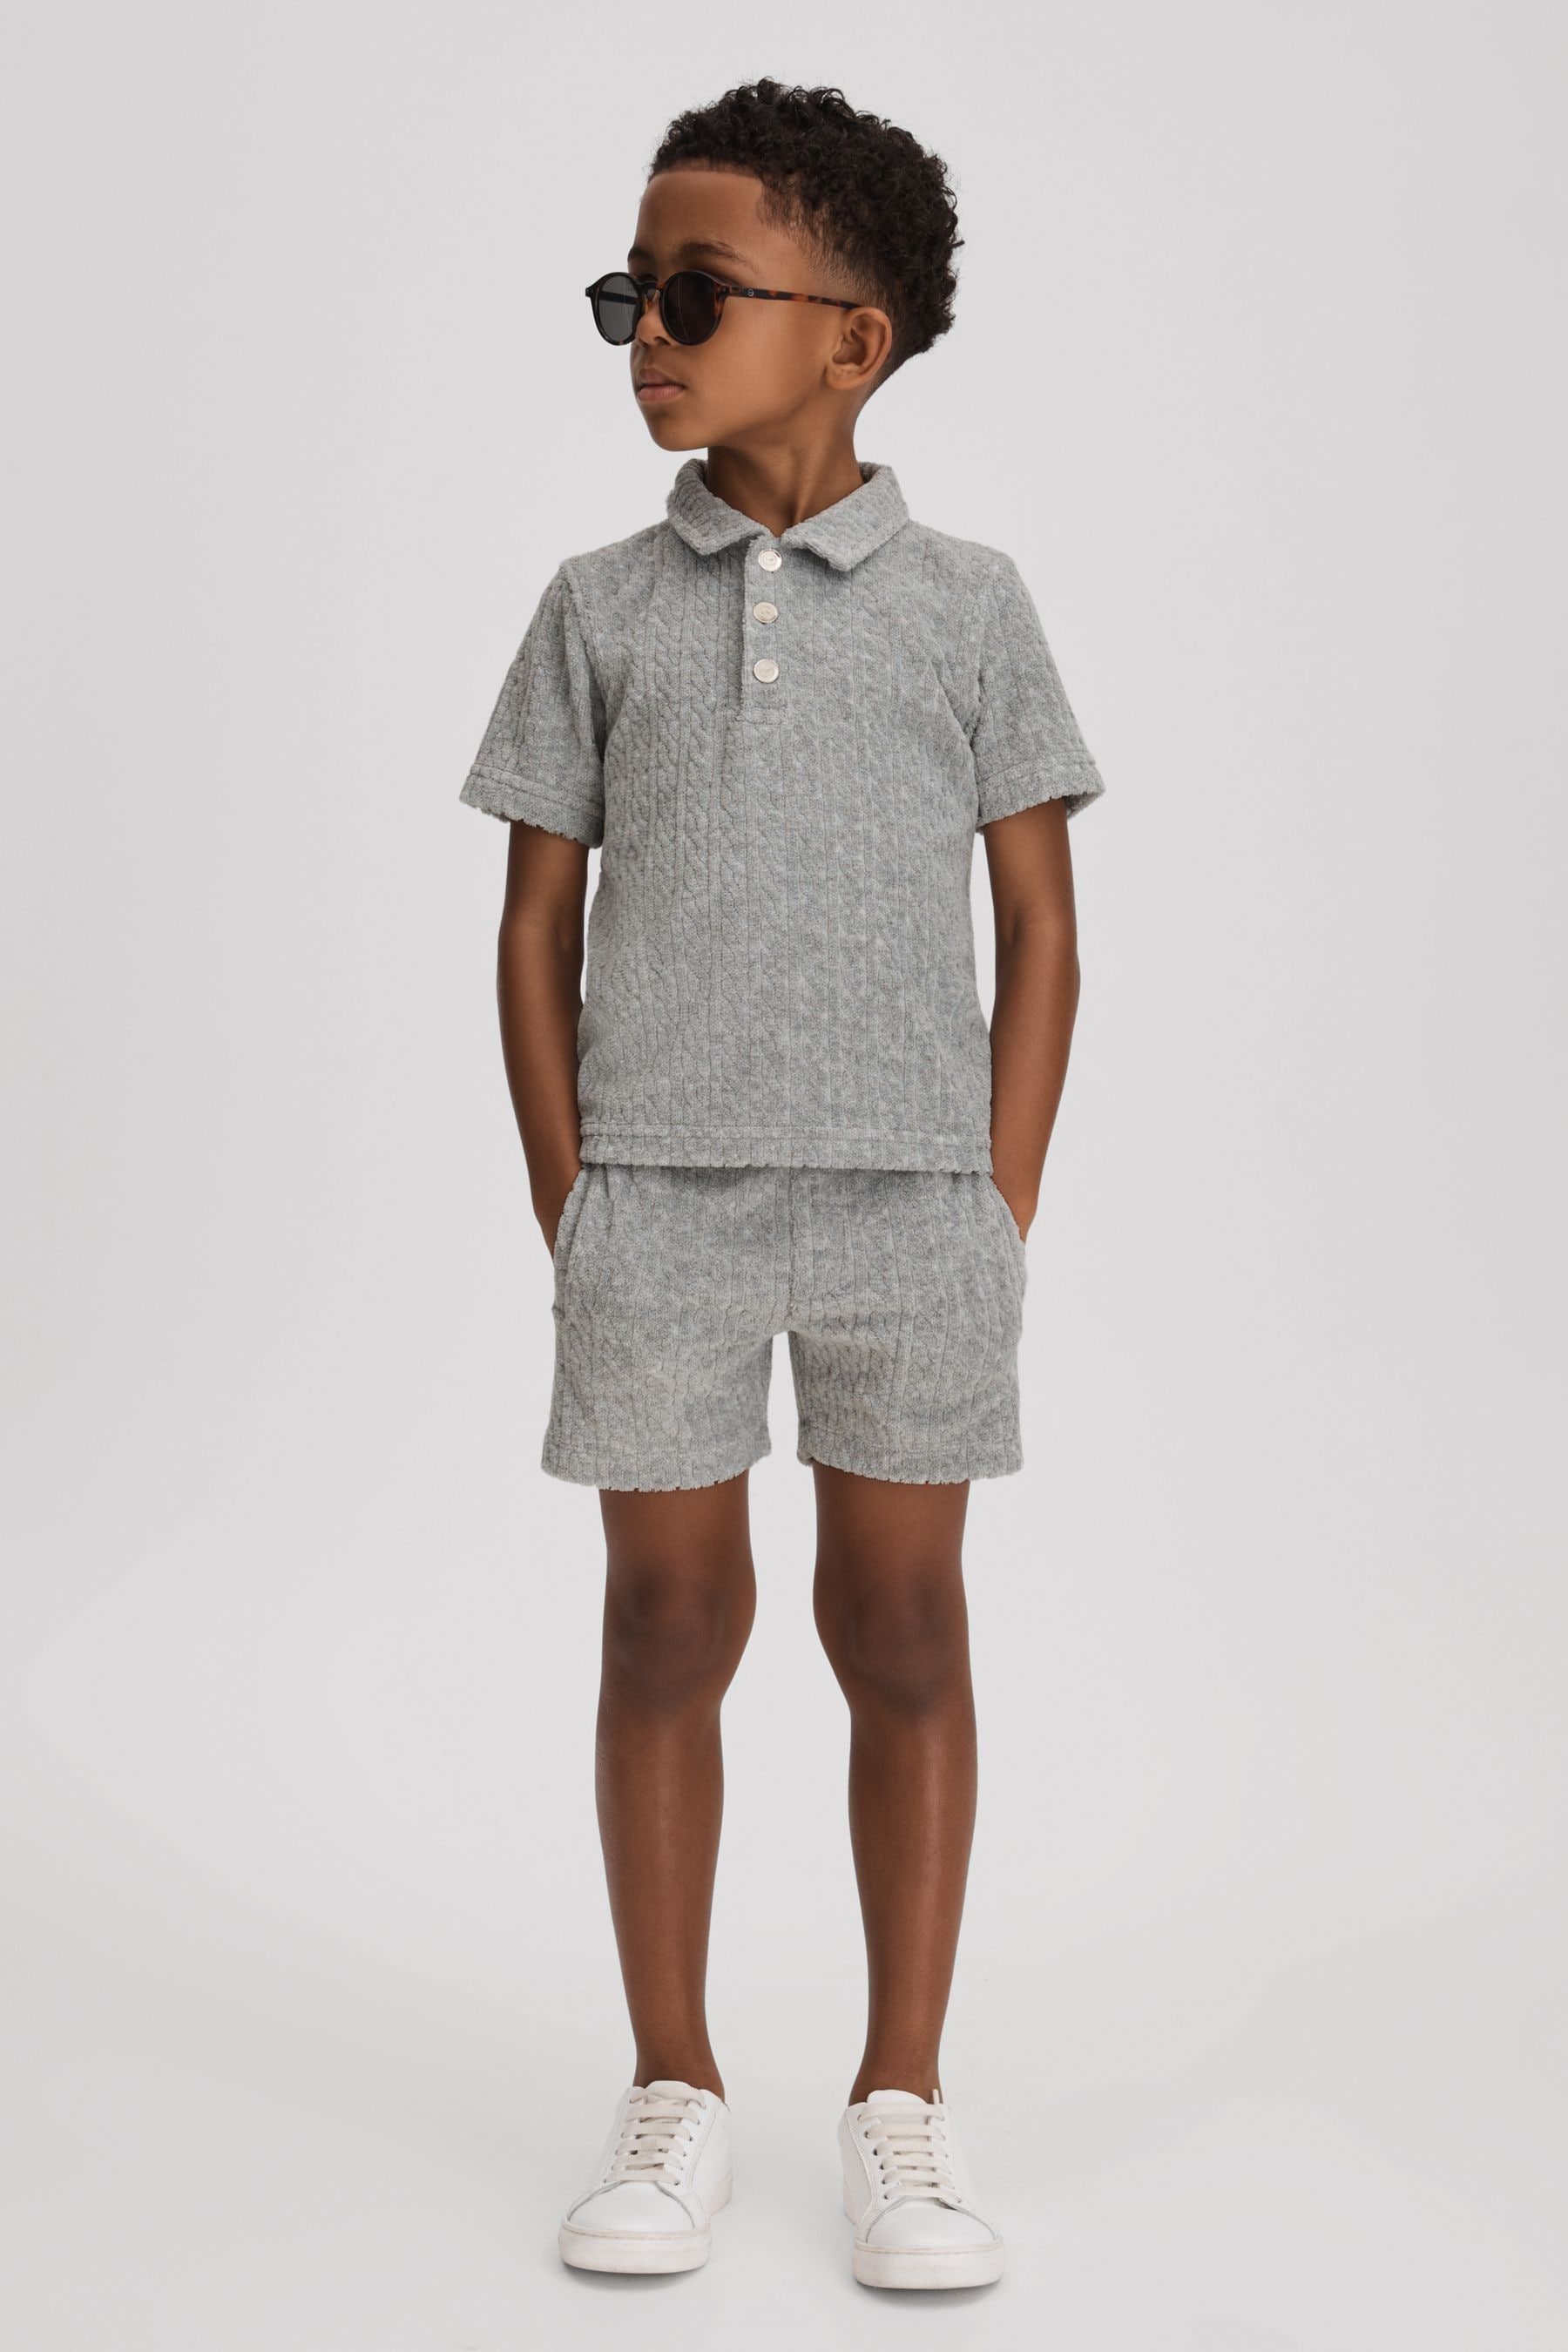 Reiss Kids' Fletcher - Soft Grey Towelling Drawstring Shorts, Age 5-6 Years